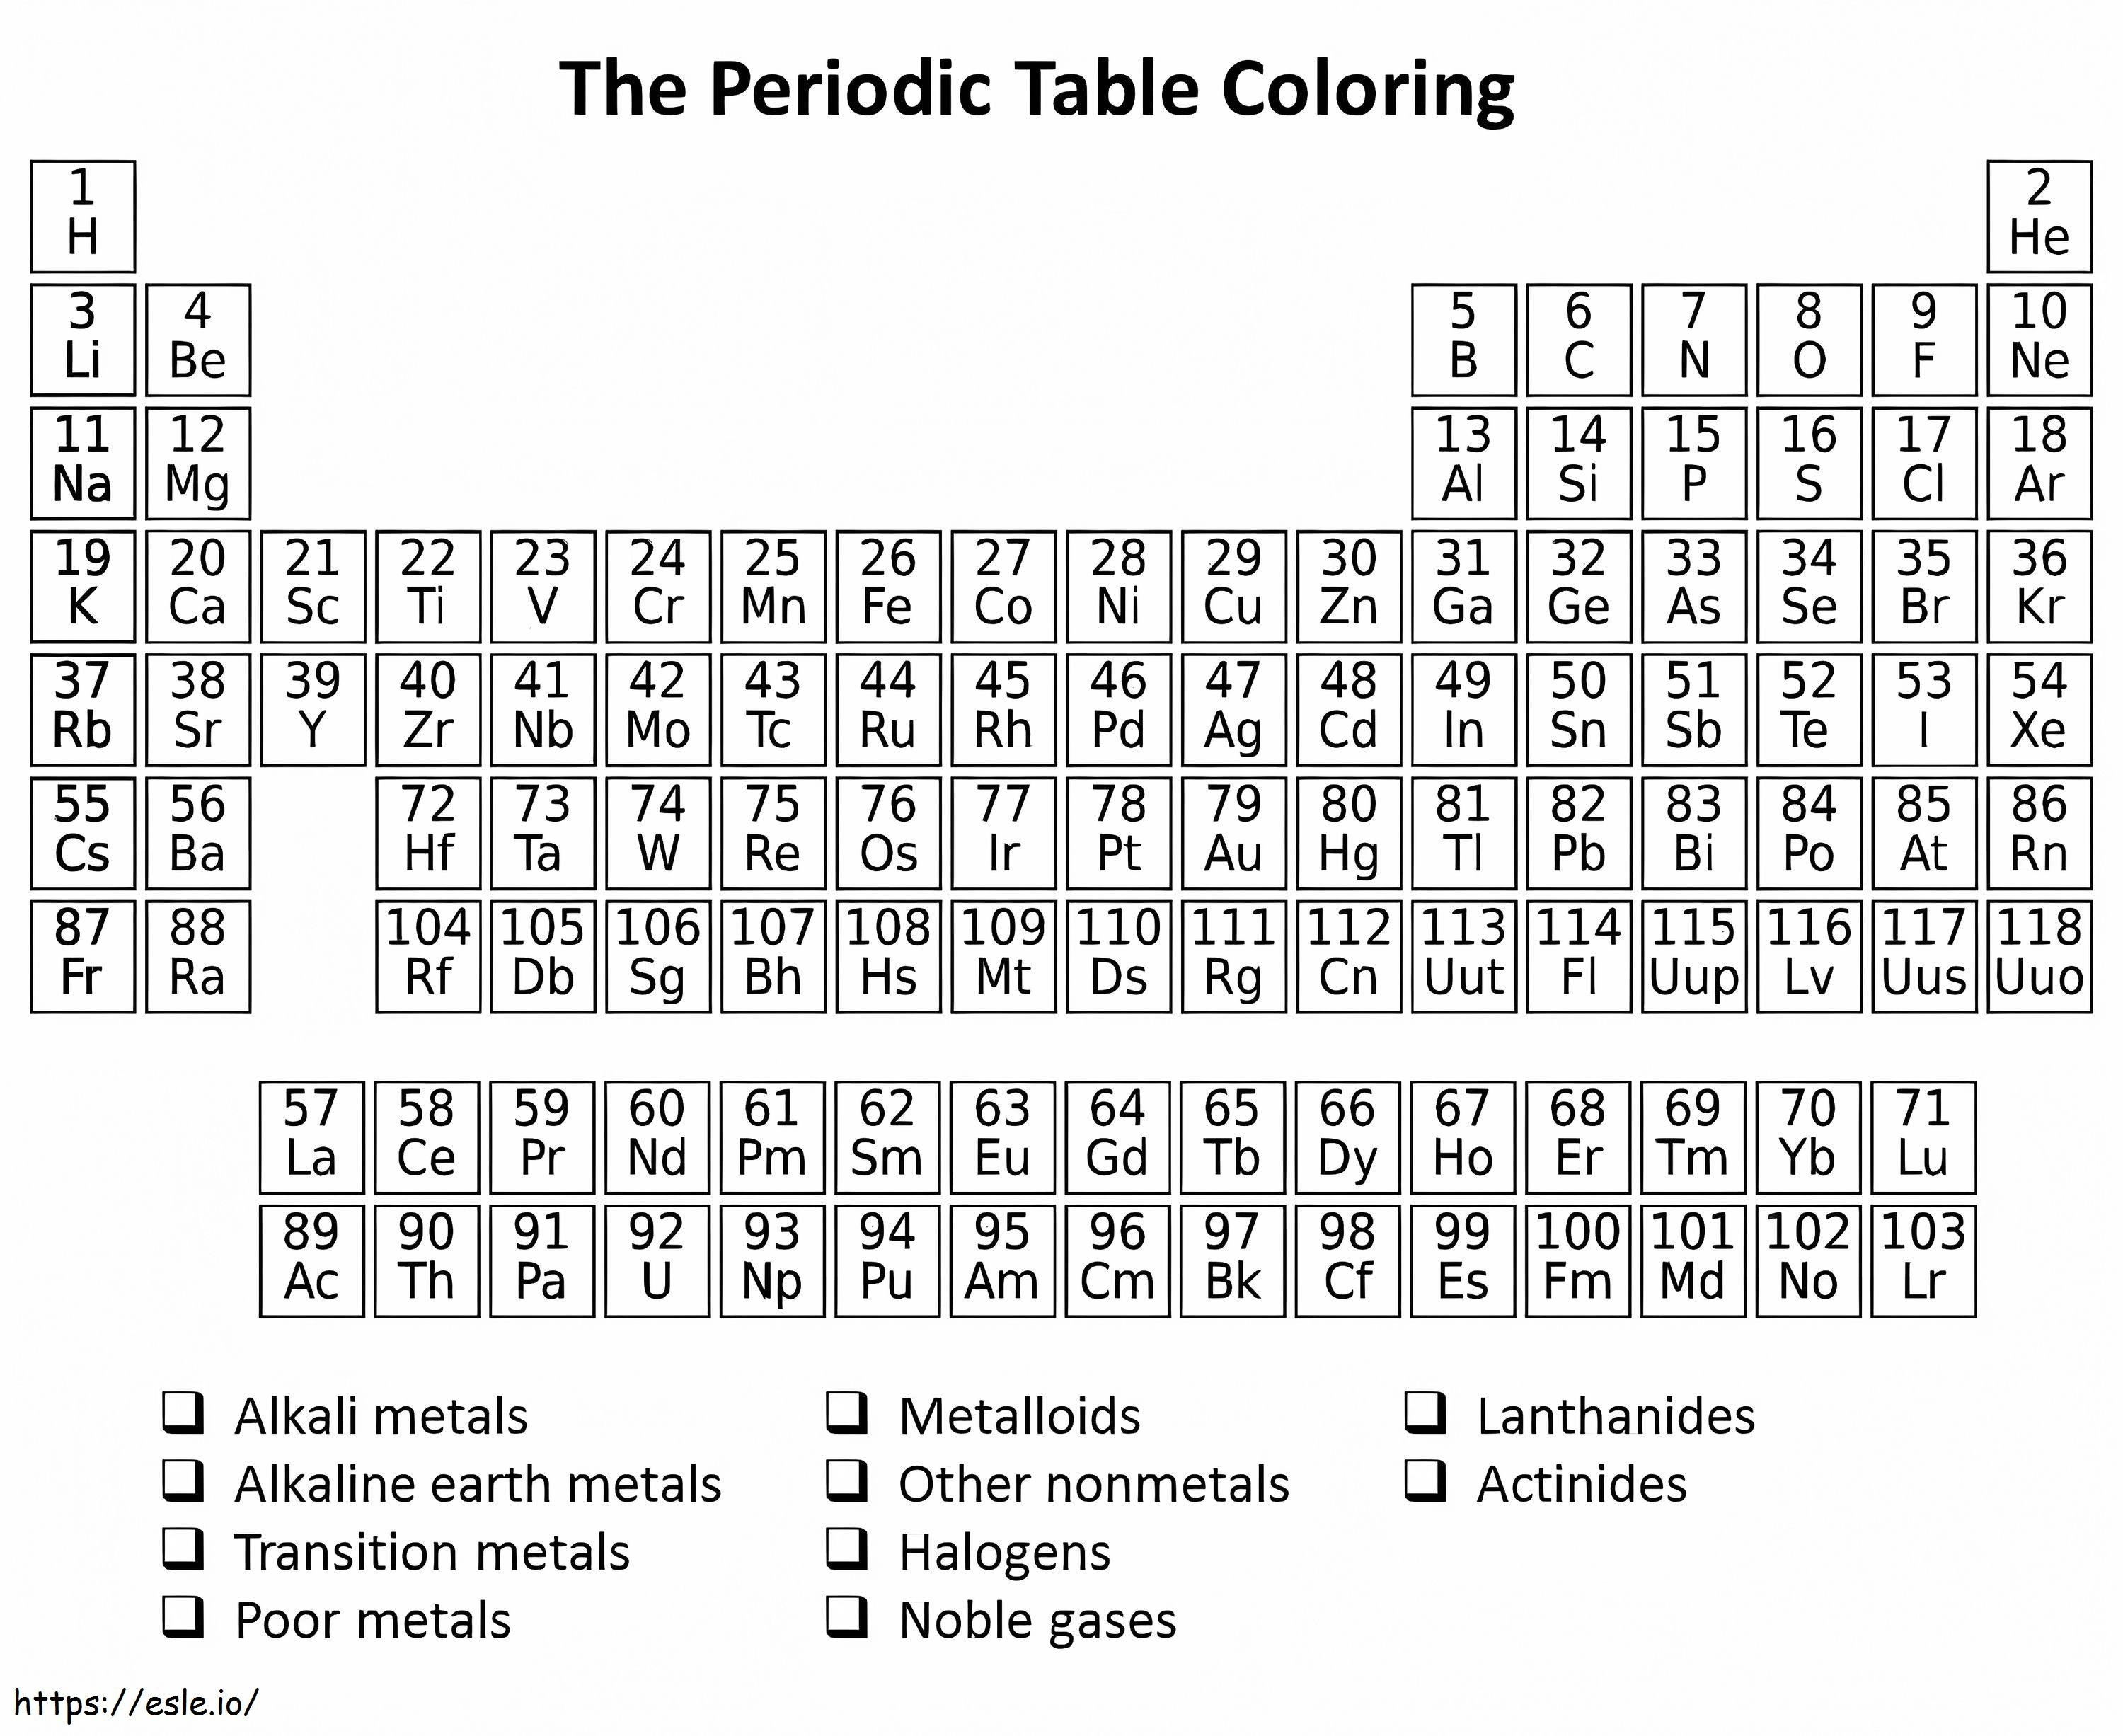 Tabela Periódica para Imprimir para colorir